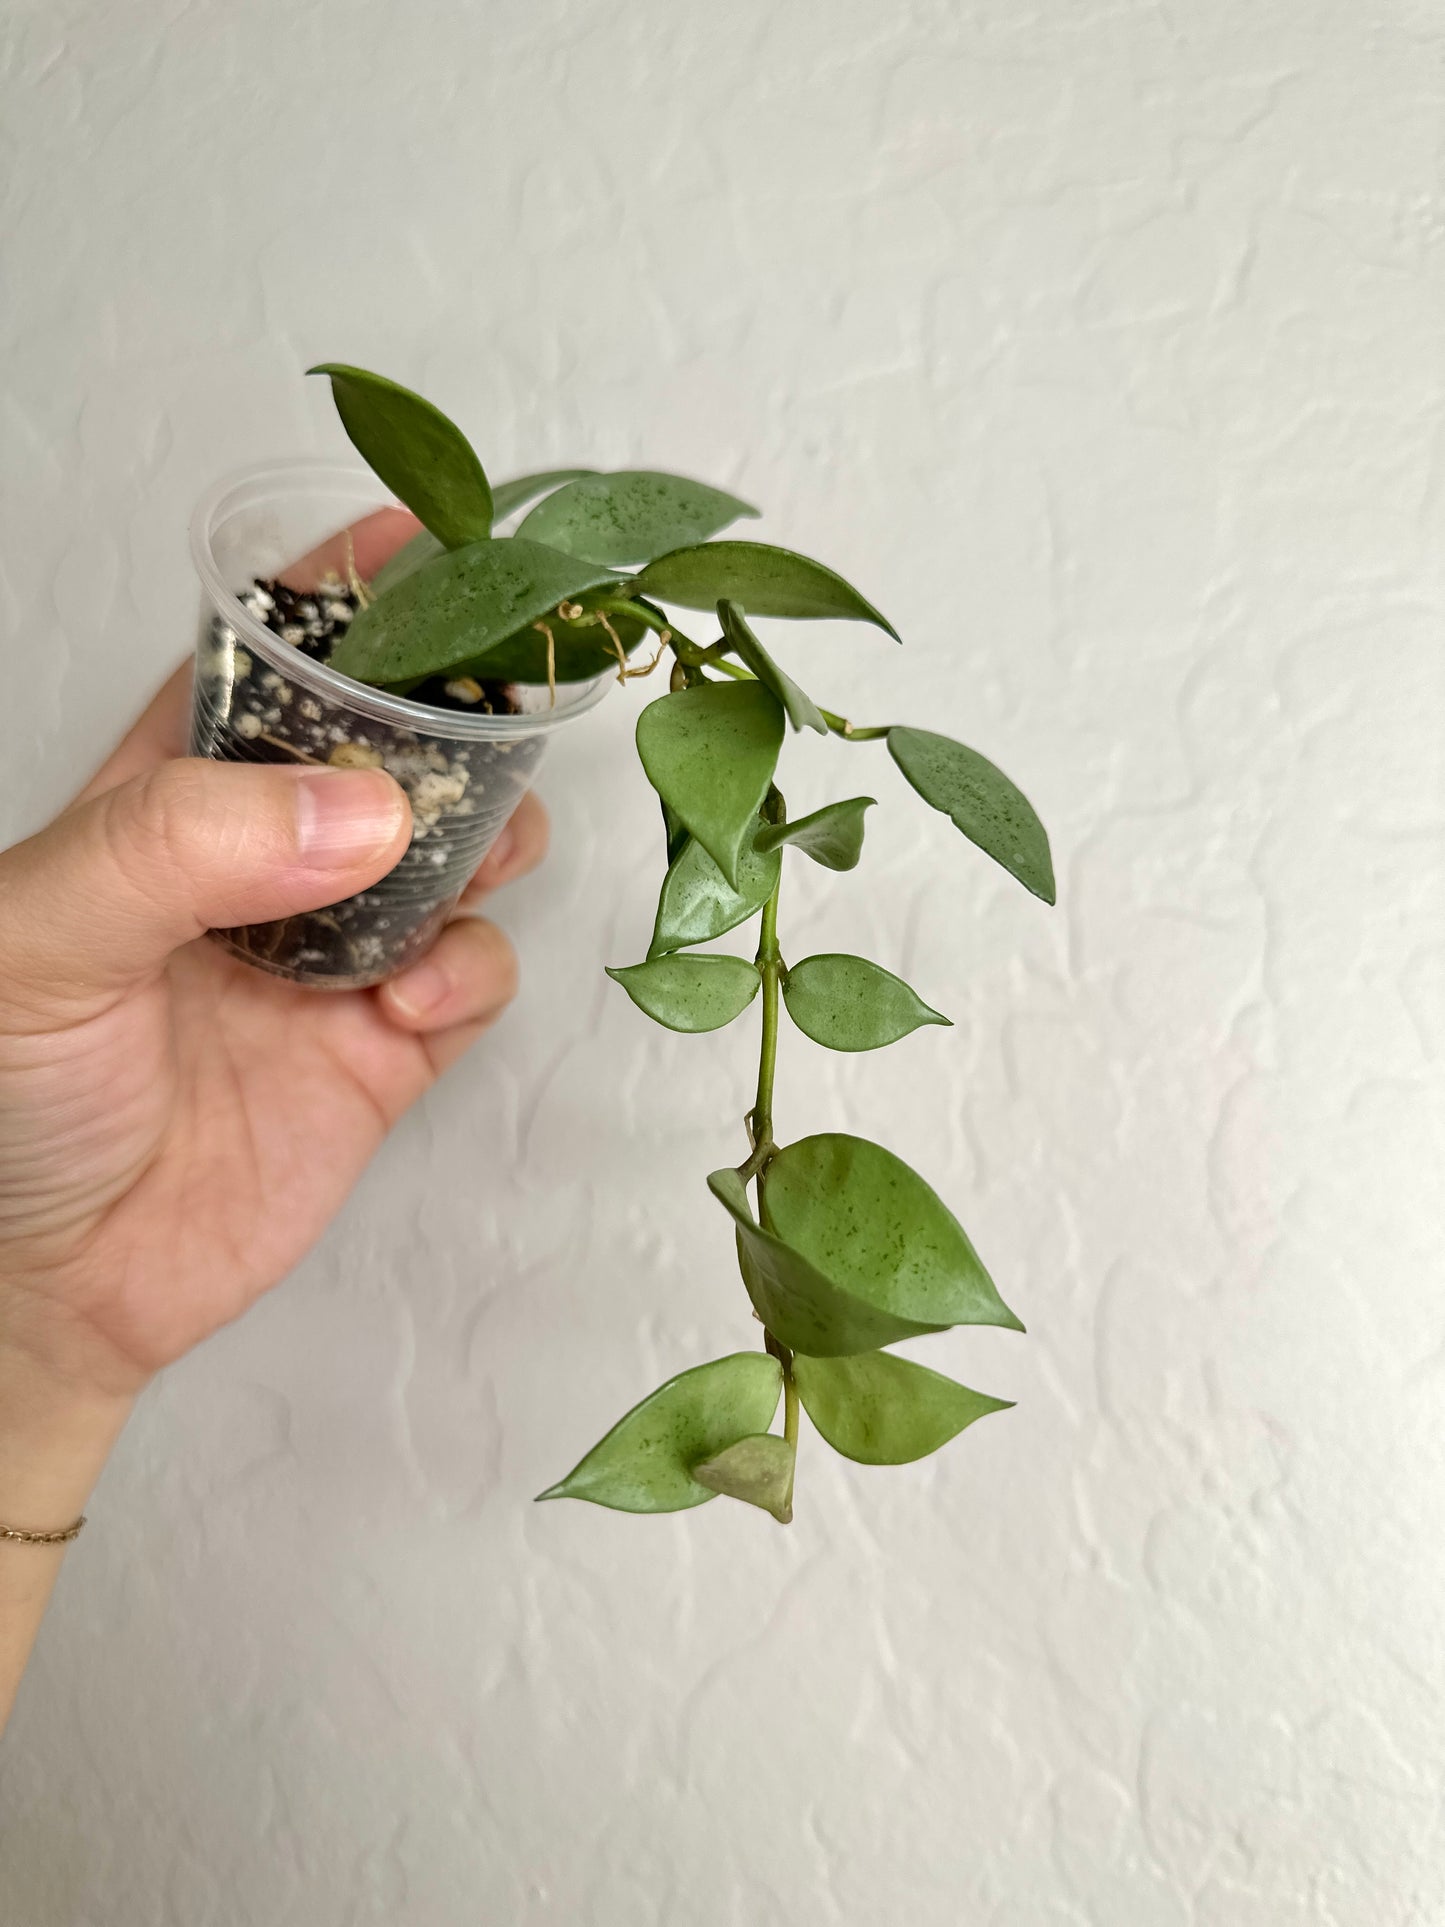 Hoya lacunosa sp. Indonesia (noid, silver) #4